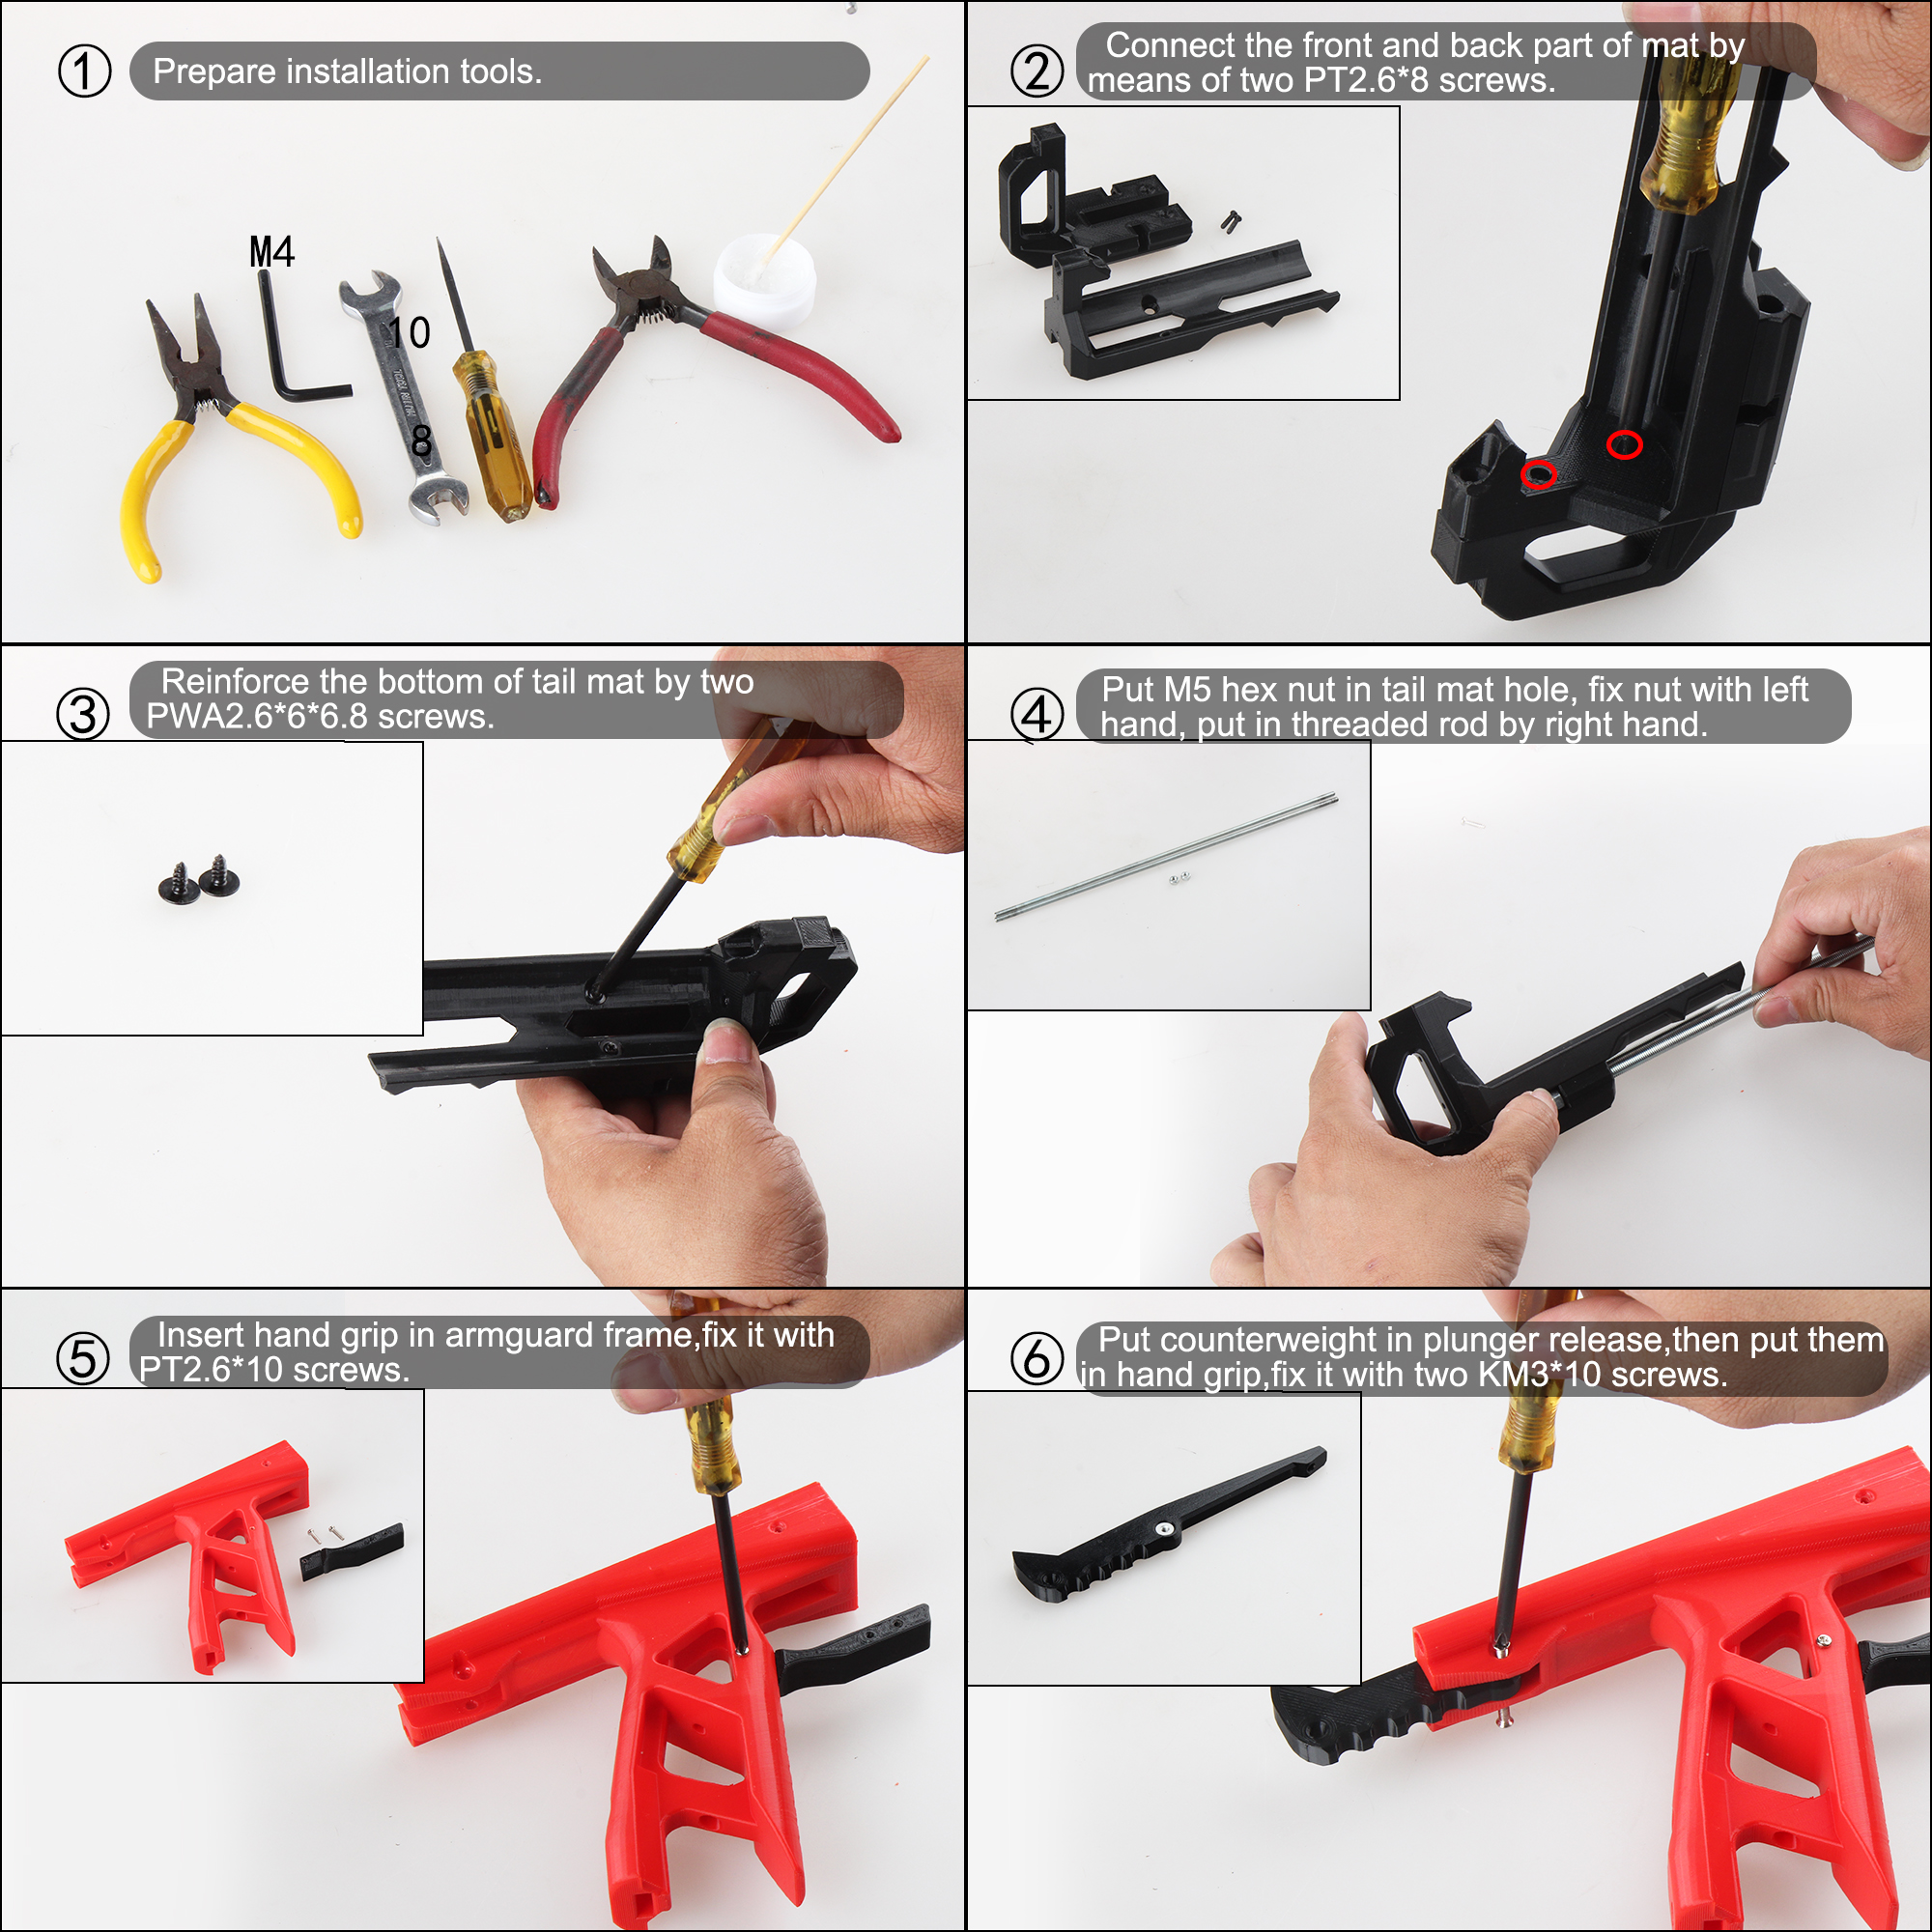 Worker F10555 Esper 3D printed Blaster Model A Assembly Instructions